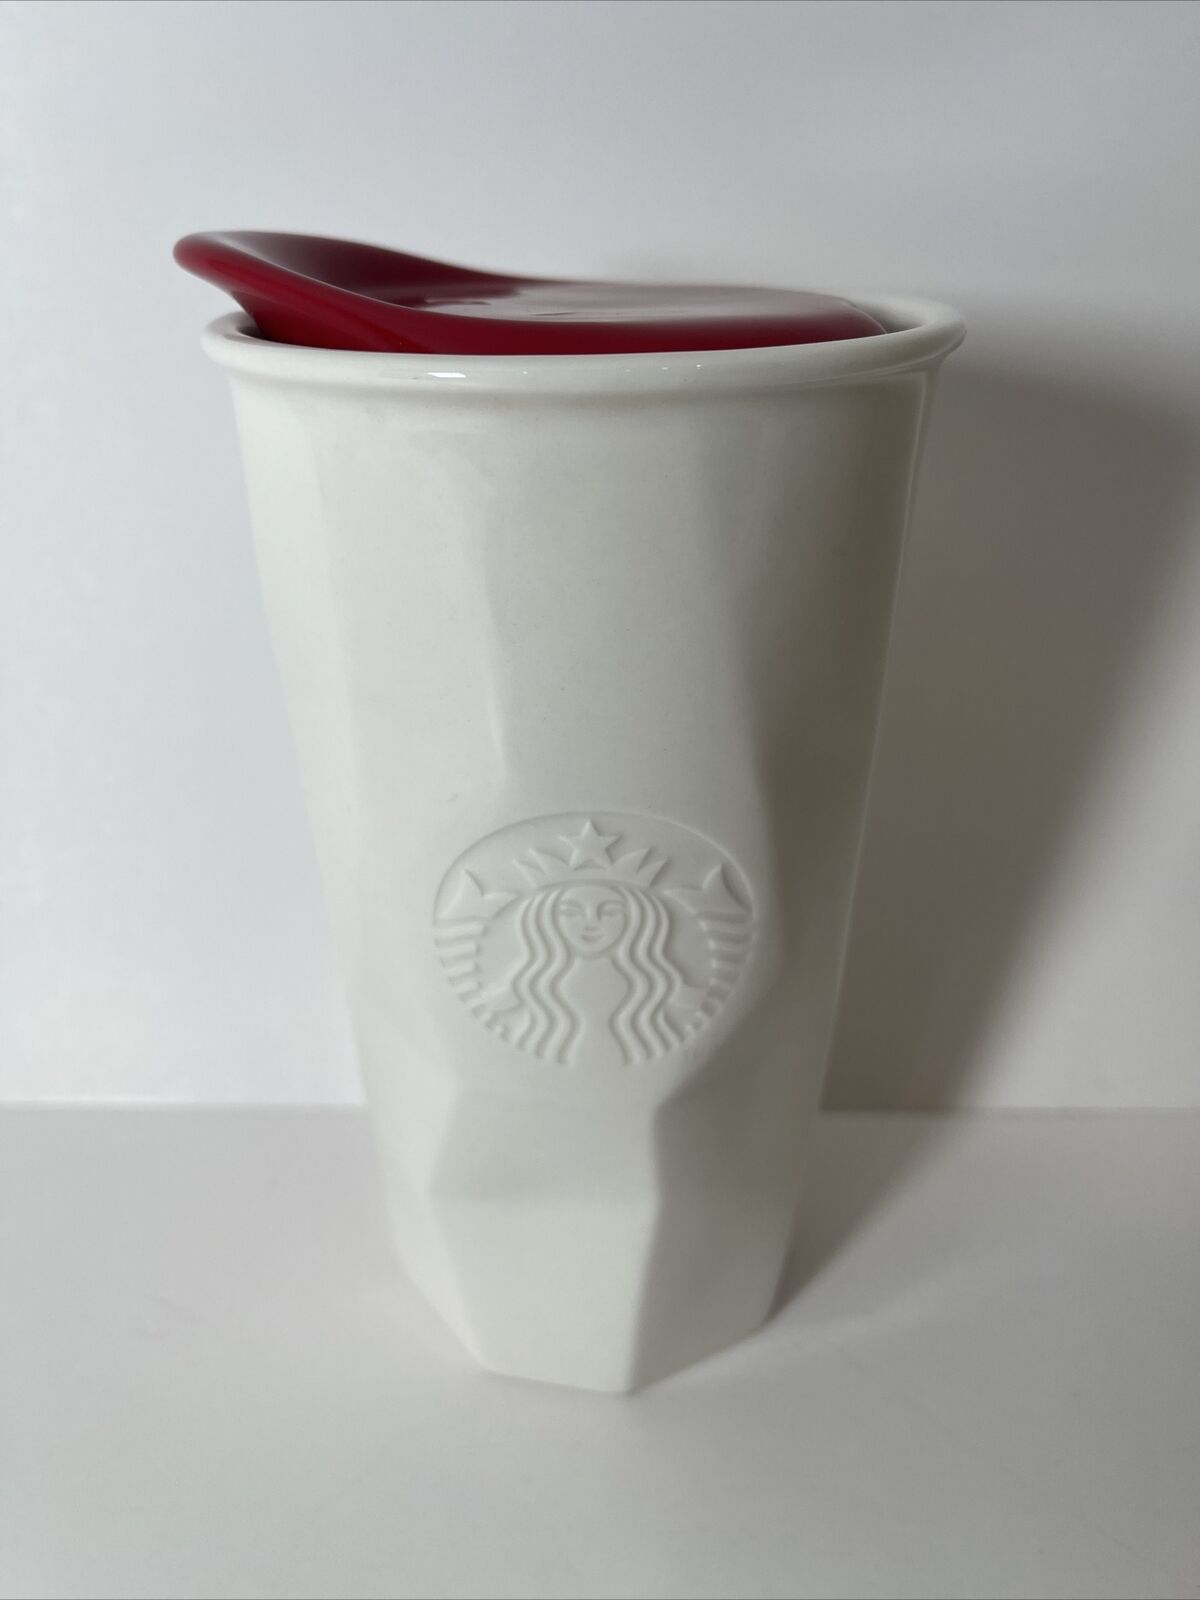 Starbucks Ceramic White Mug Tumbler 10 oz Red Lid 2013 Travel Mug